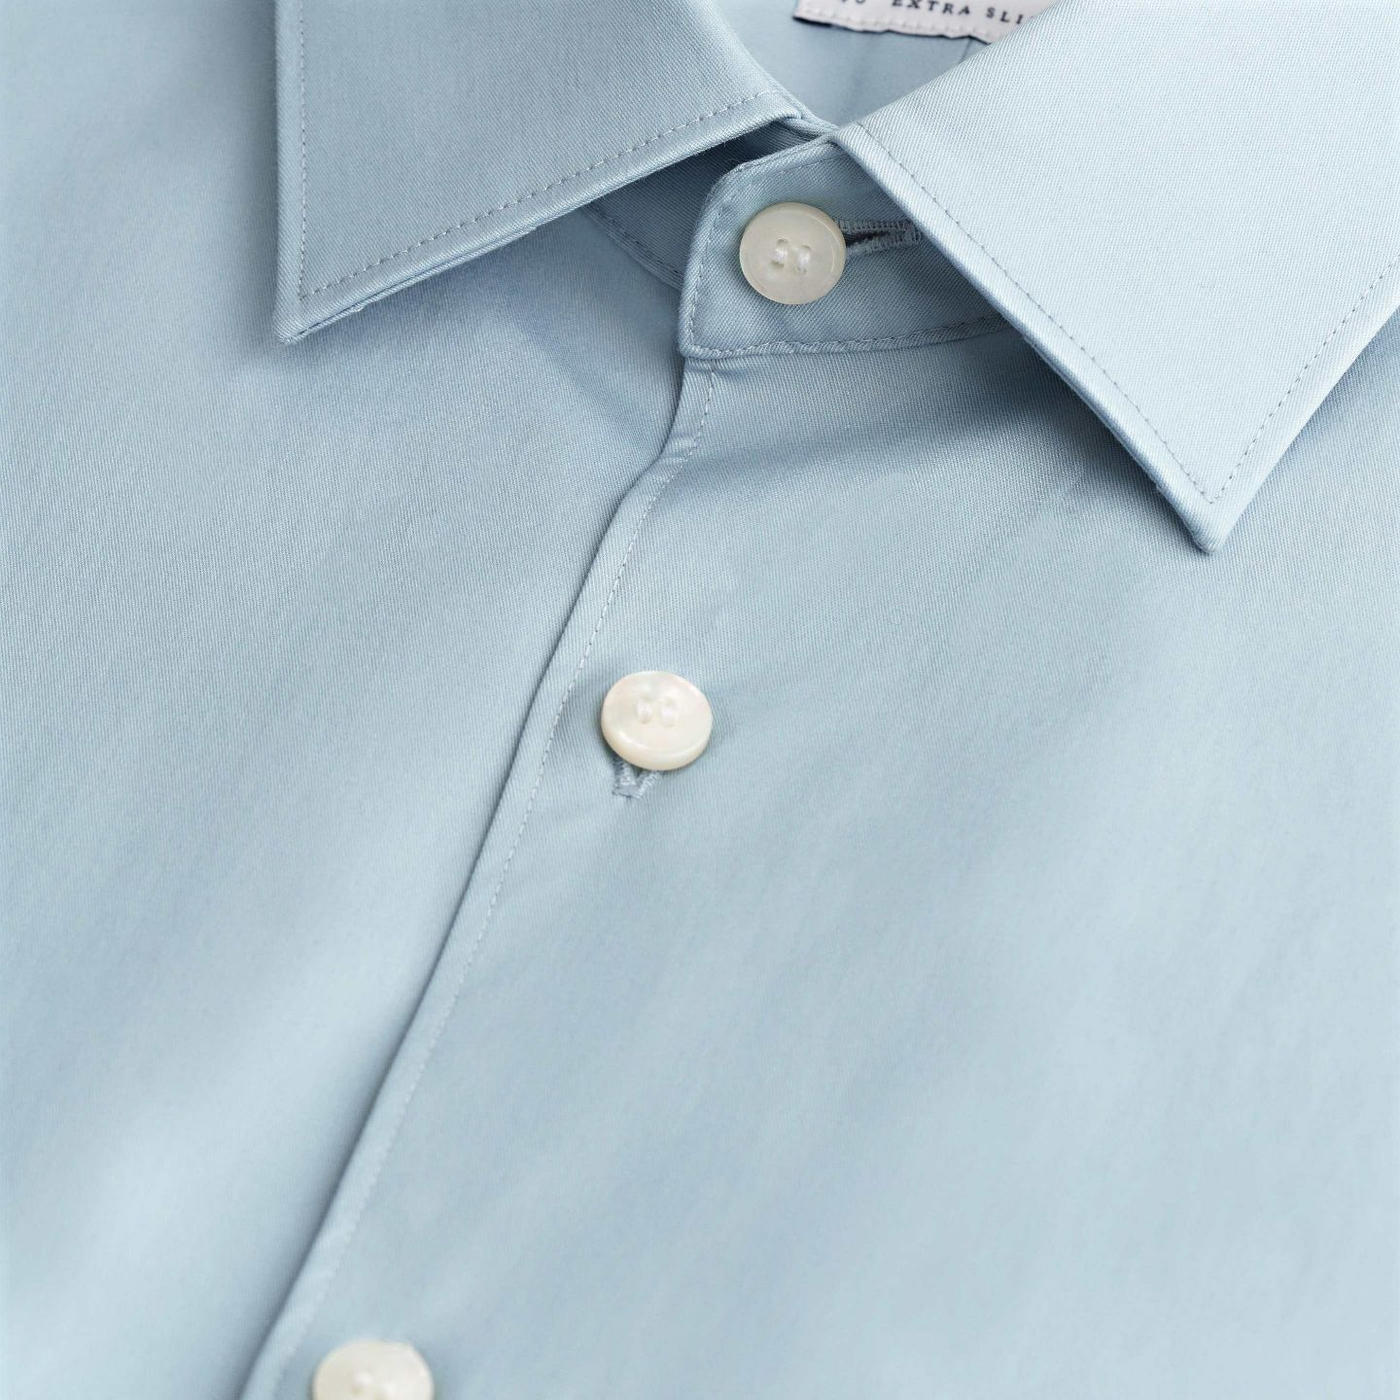 Gotstyle Fashion - Tiger Of Sweden Collar Shirts Twill Stretch Cotton Blend Shirt - Light Blue